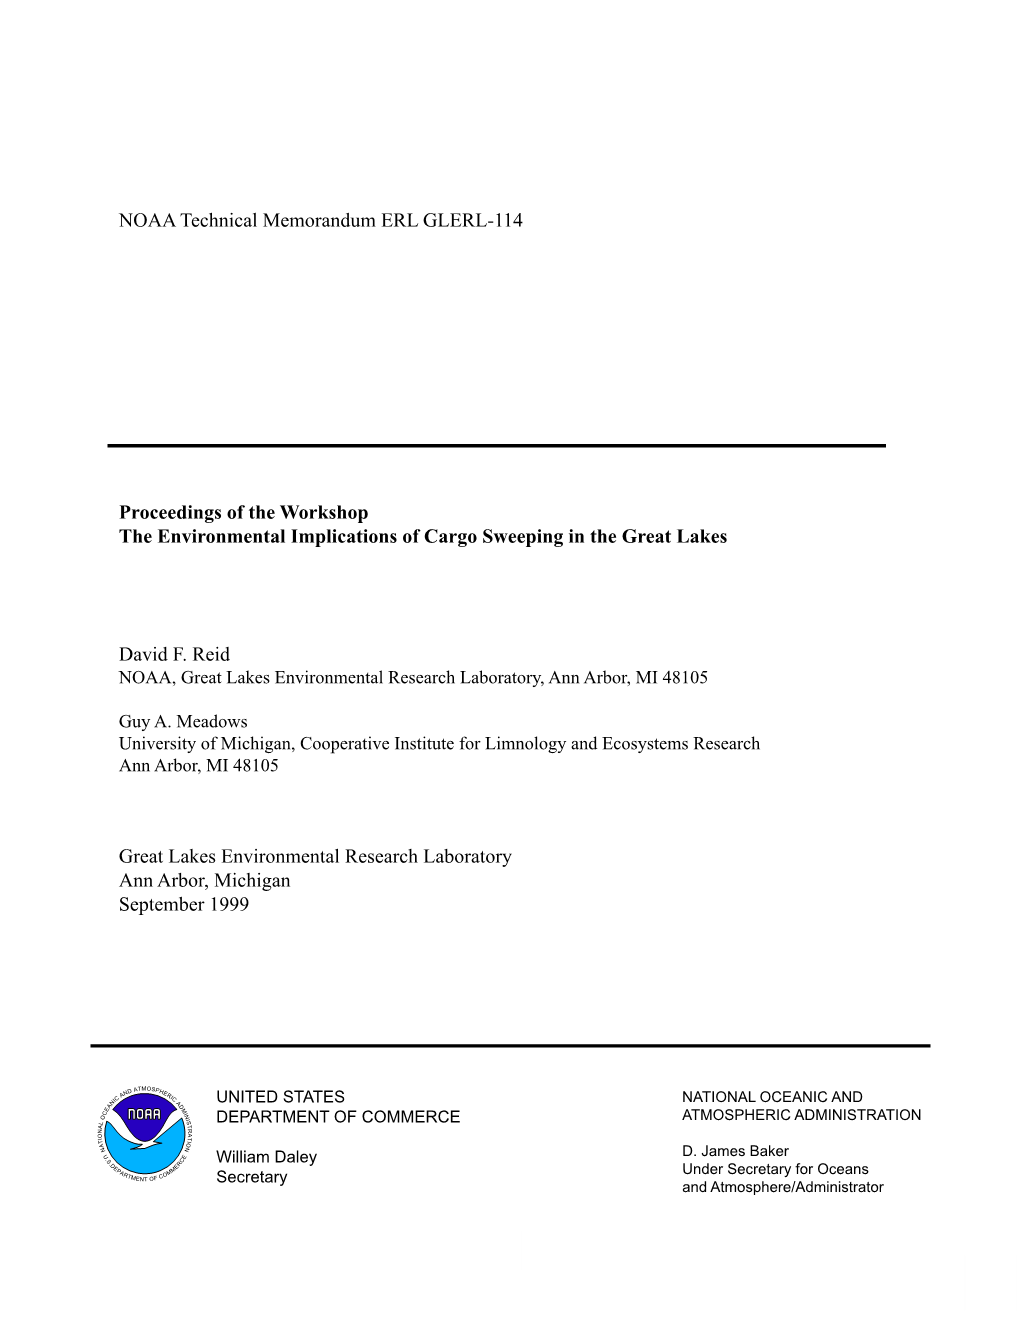 Proceedings, Workshop on the Environmental Implications Of